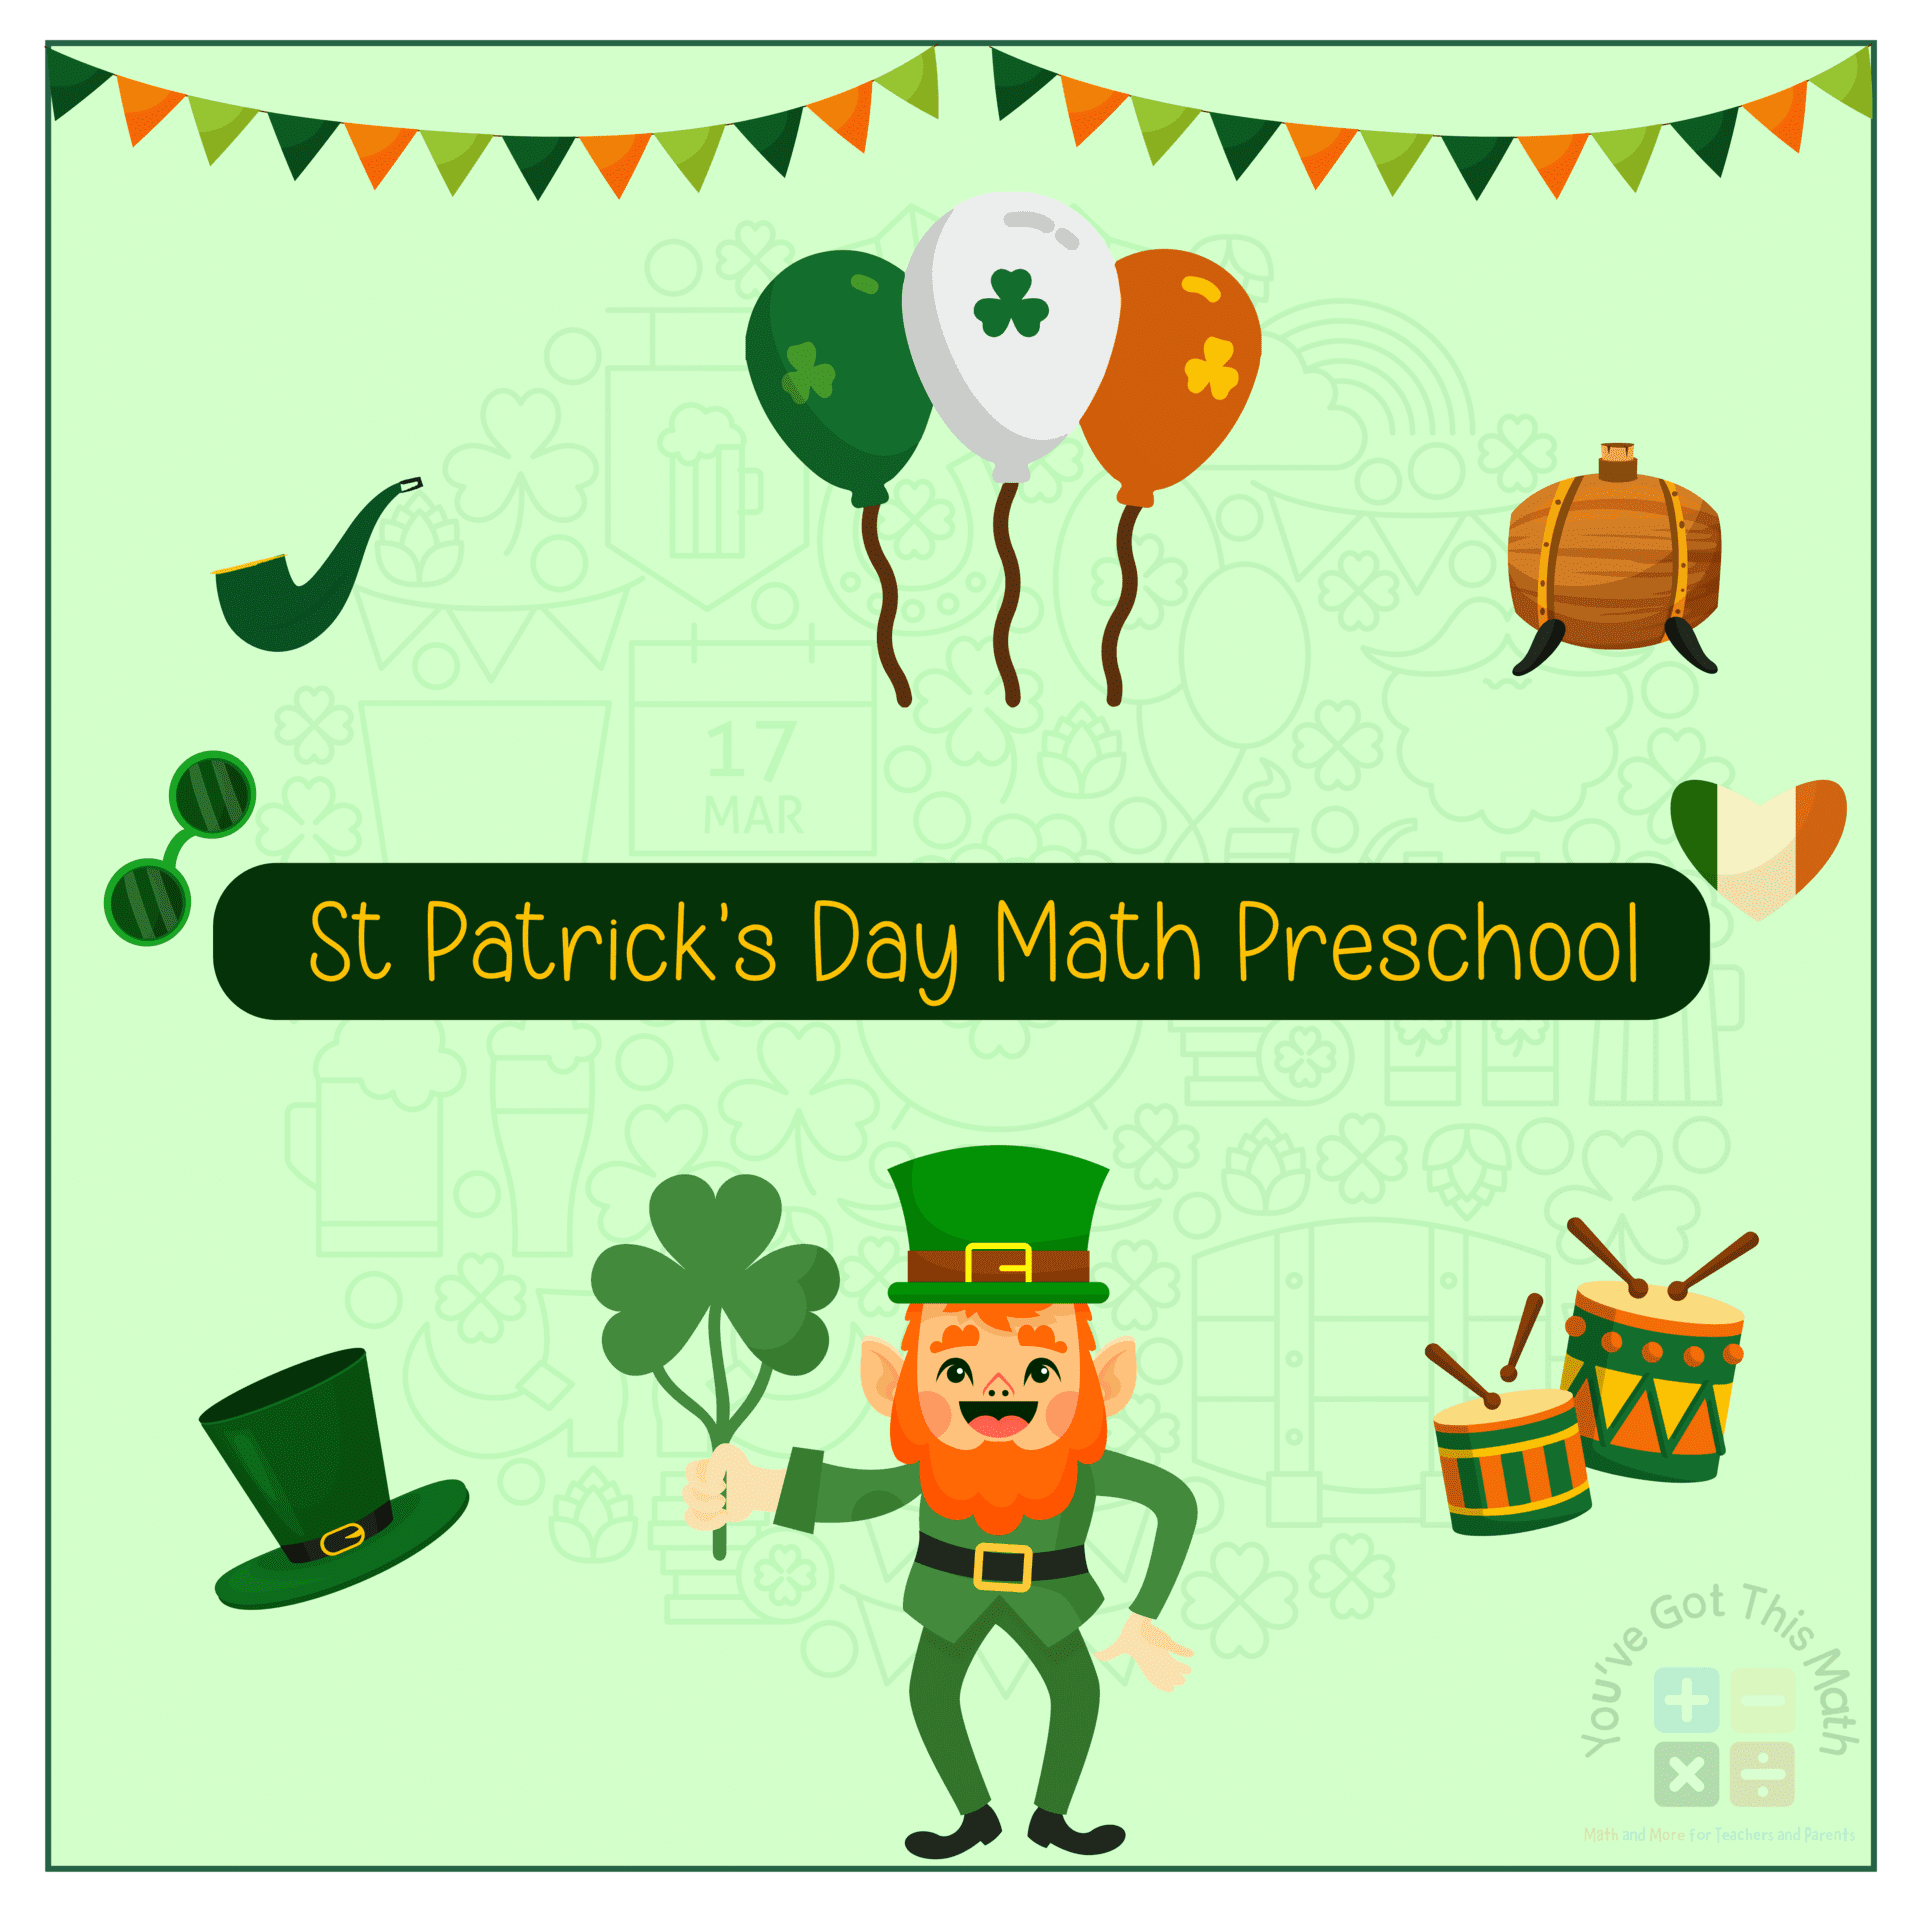 St. Patrick’s Day Math Preschool | Free Priantables